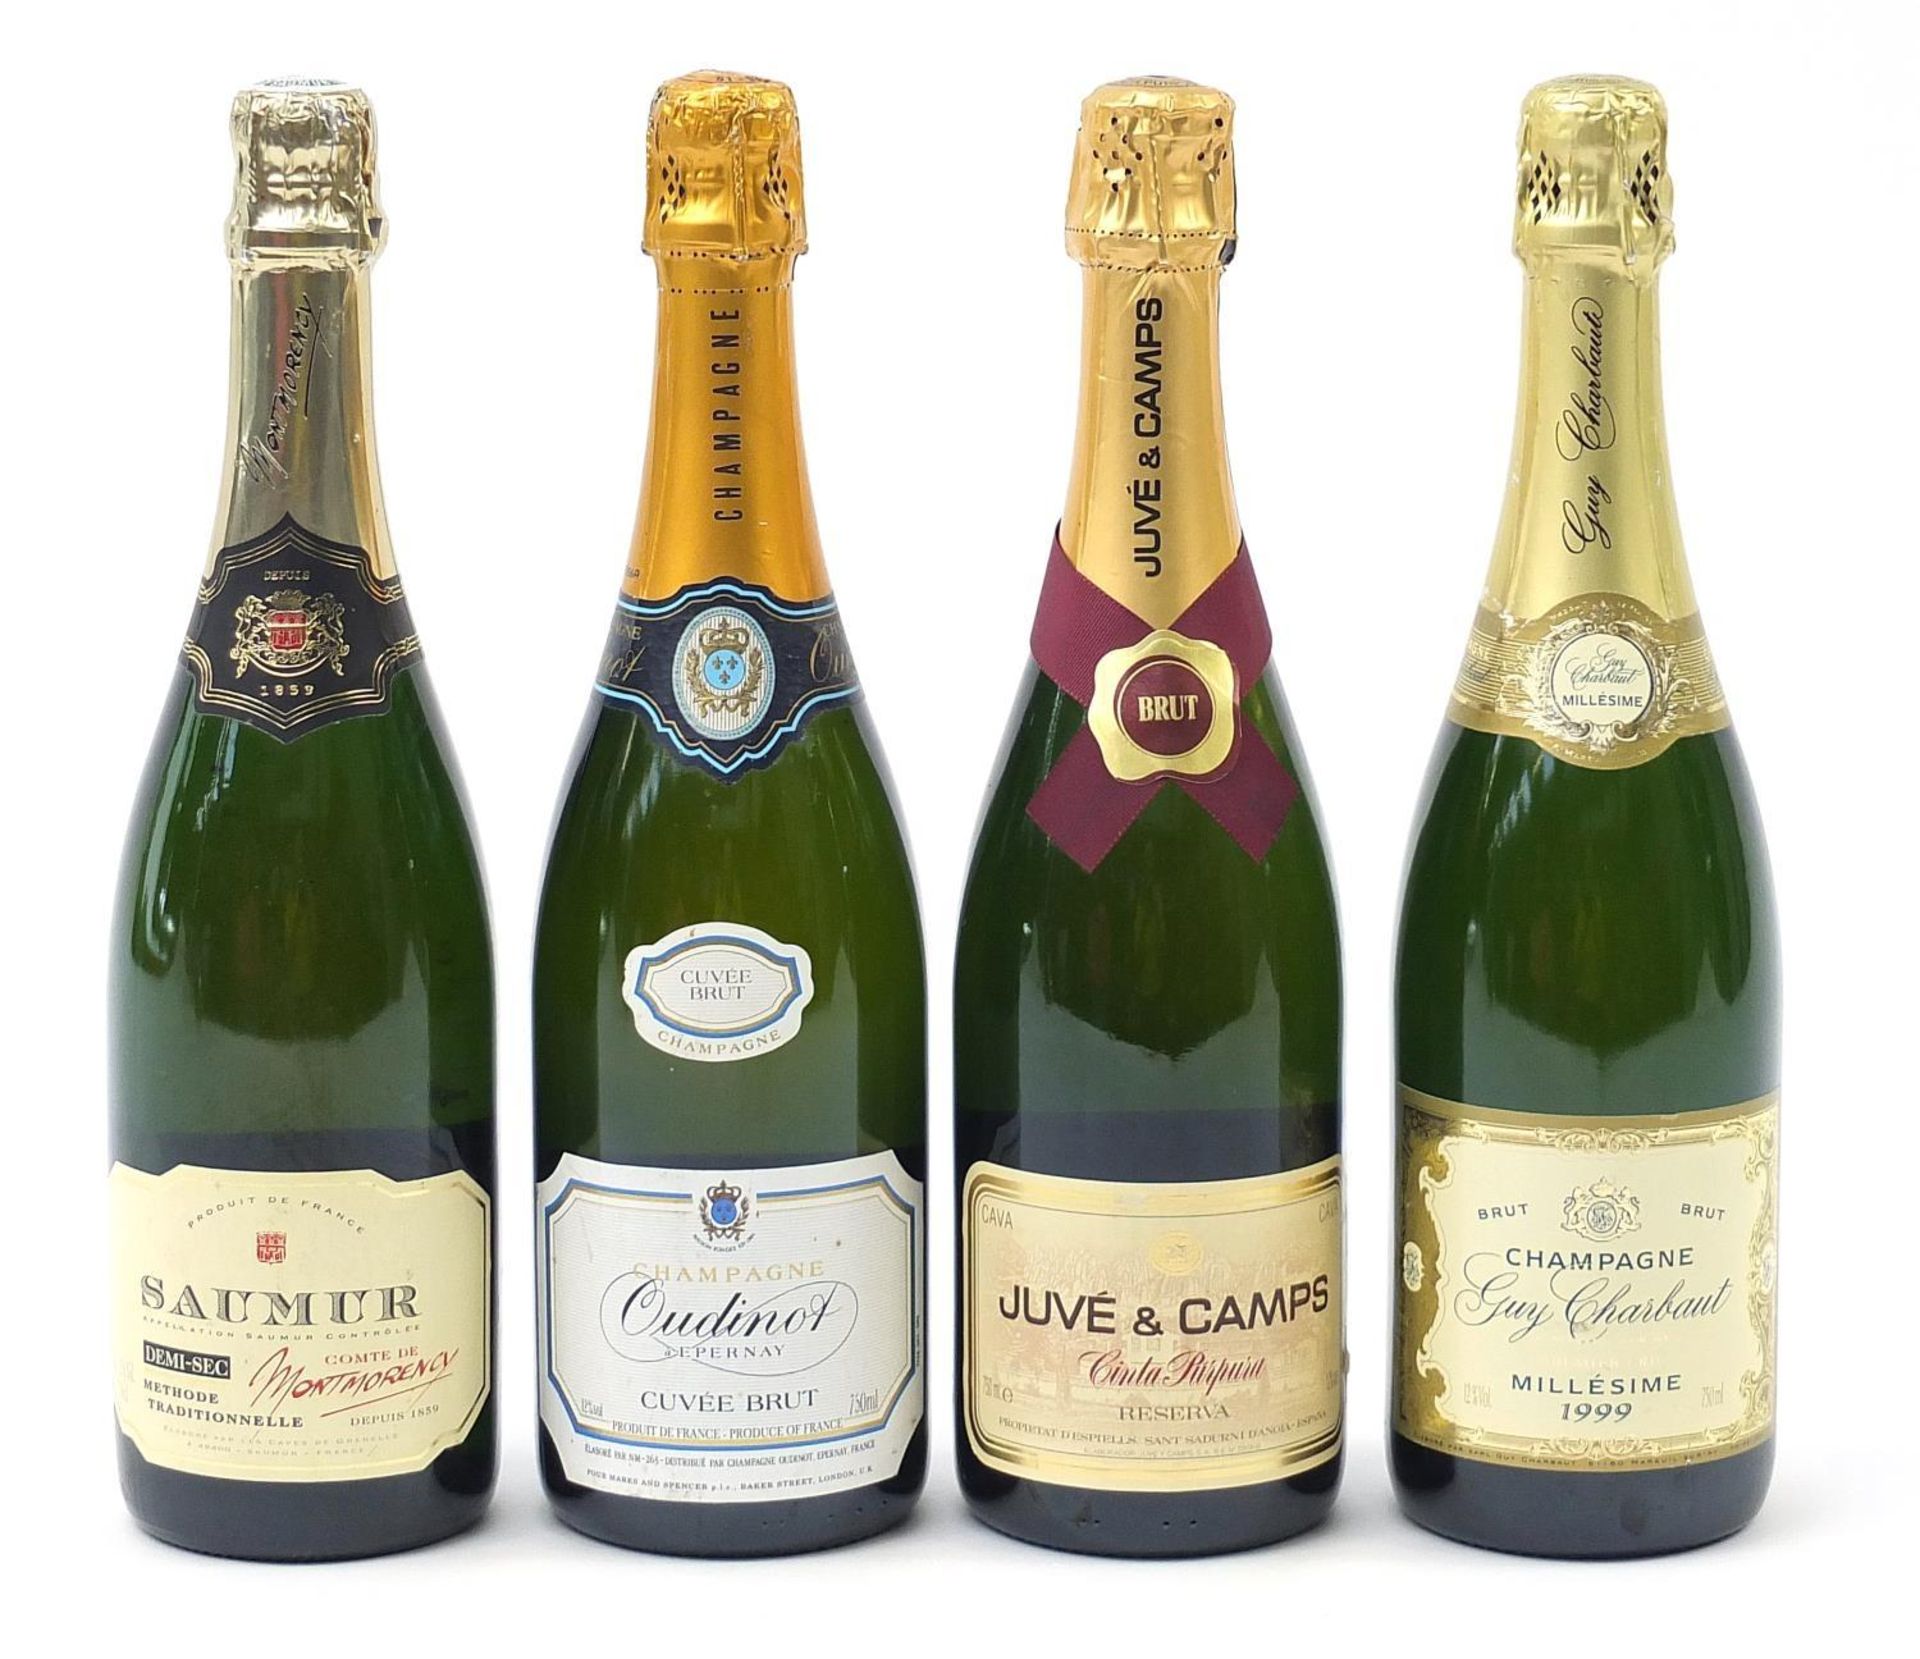 Four bottles of Champagne including Juve & Camps :